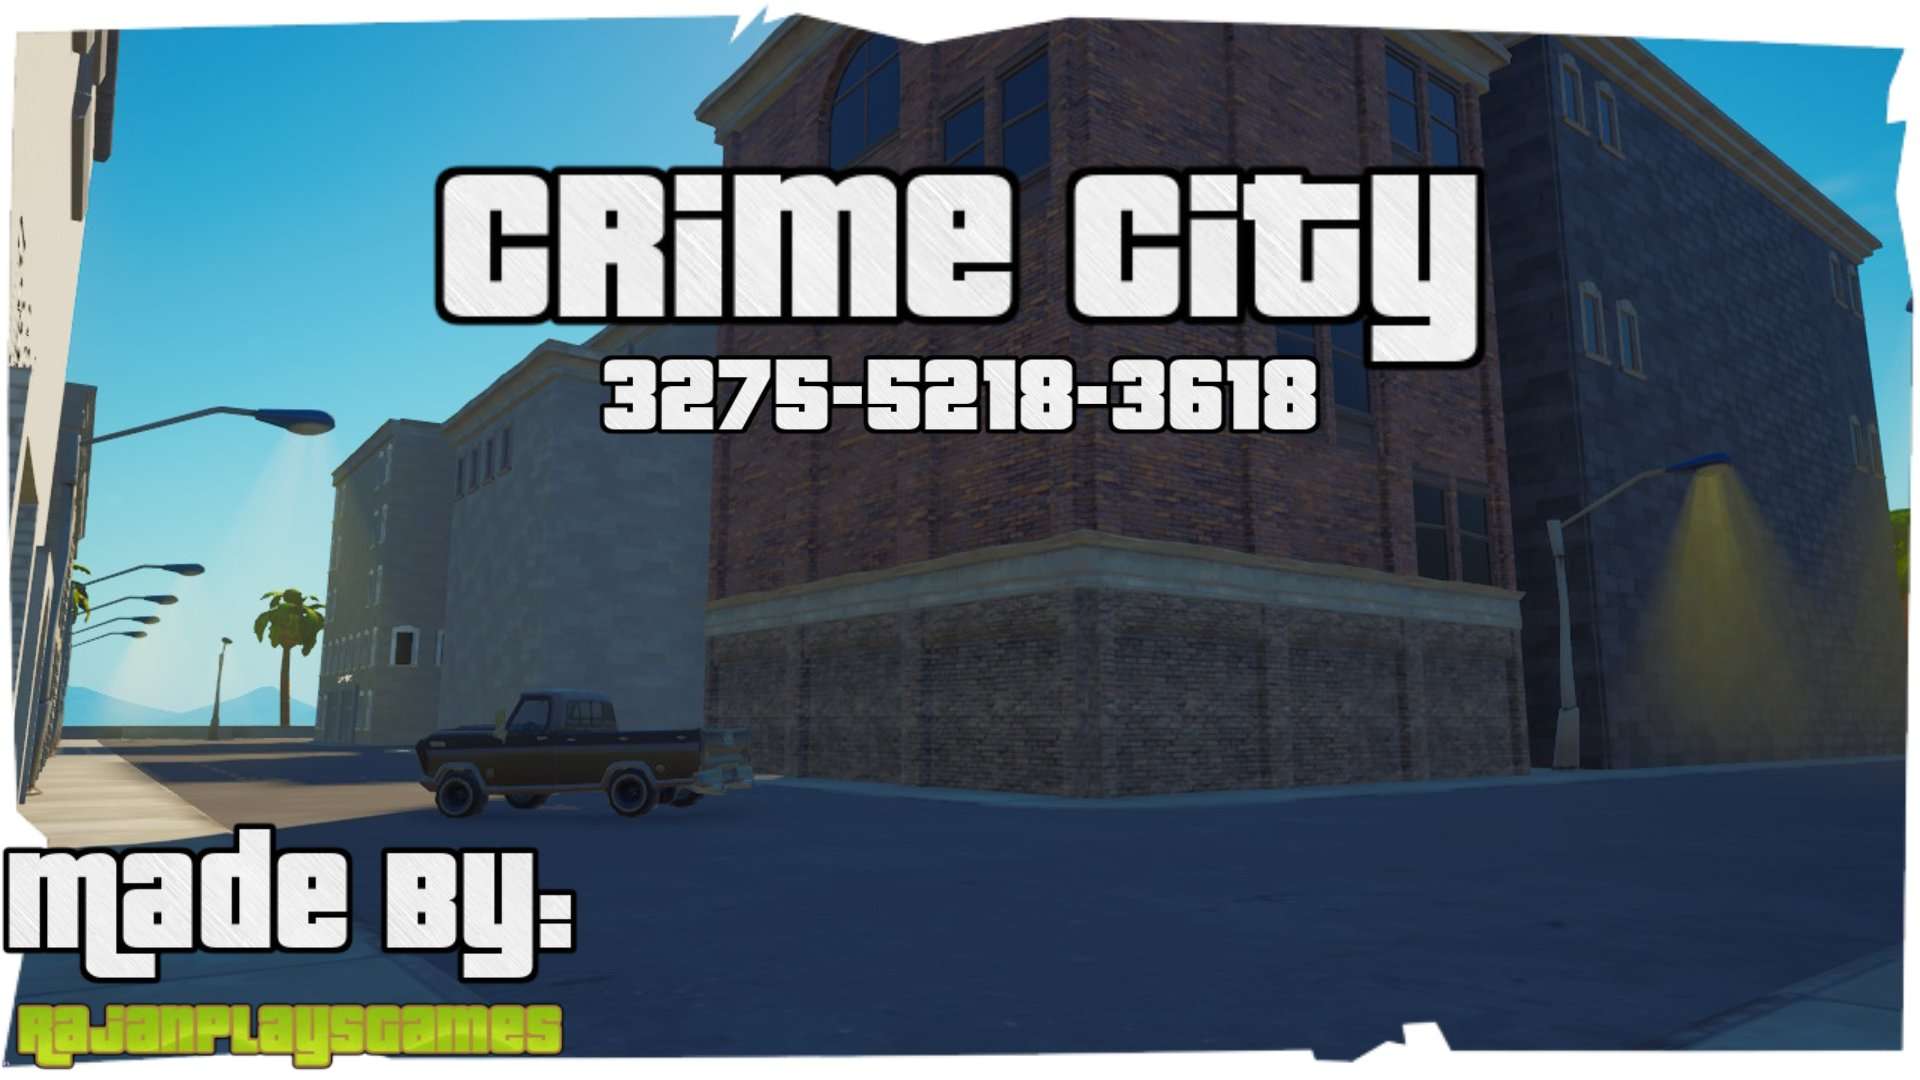 CRIME CITY 3275-5218-3618 by rajan - Fortnite